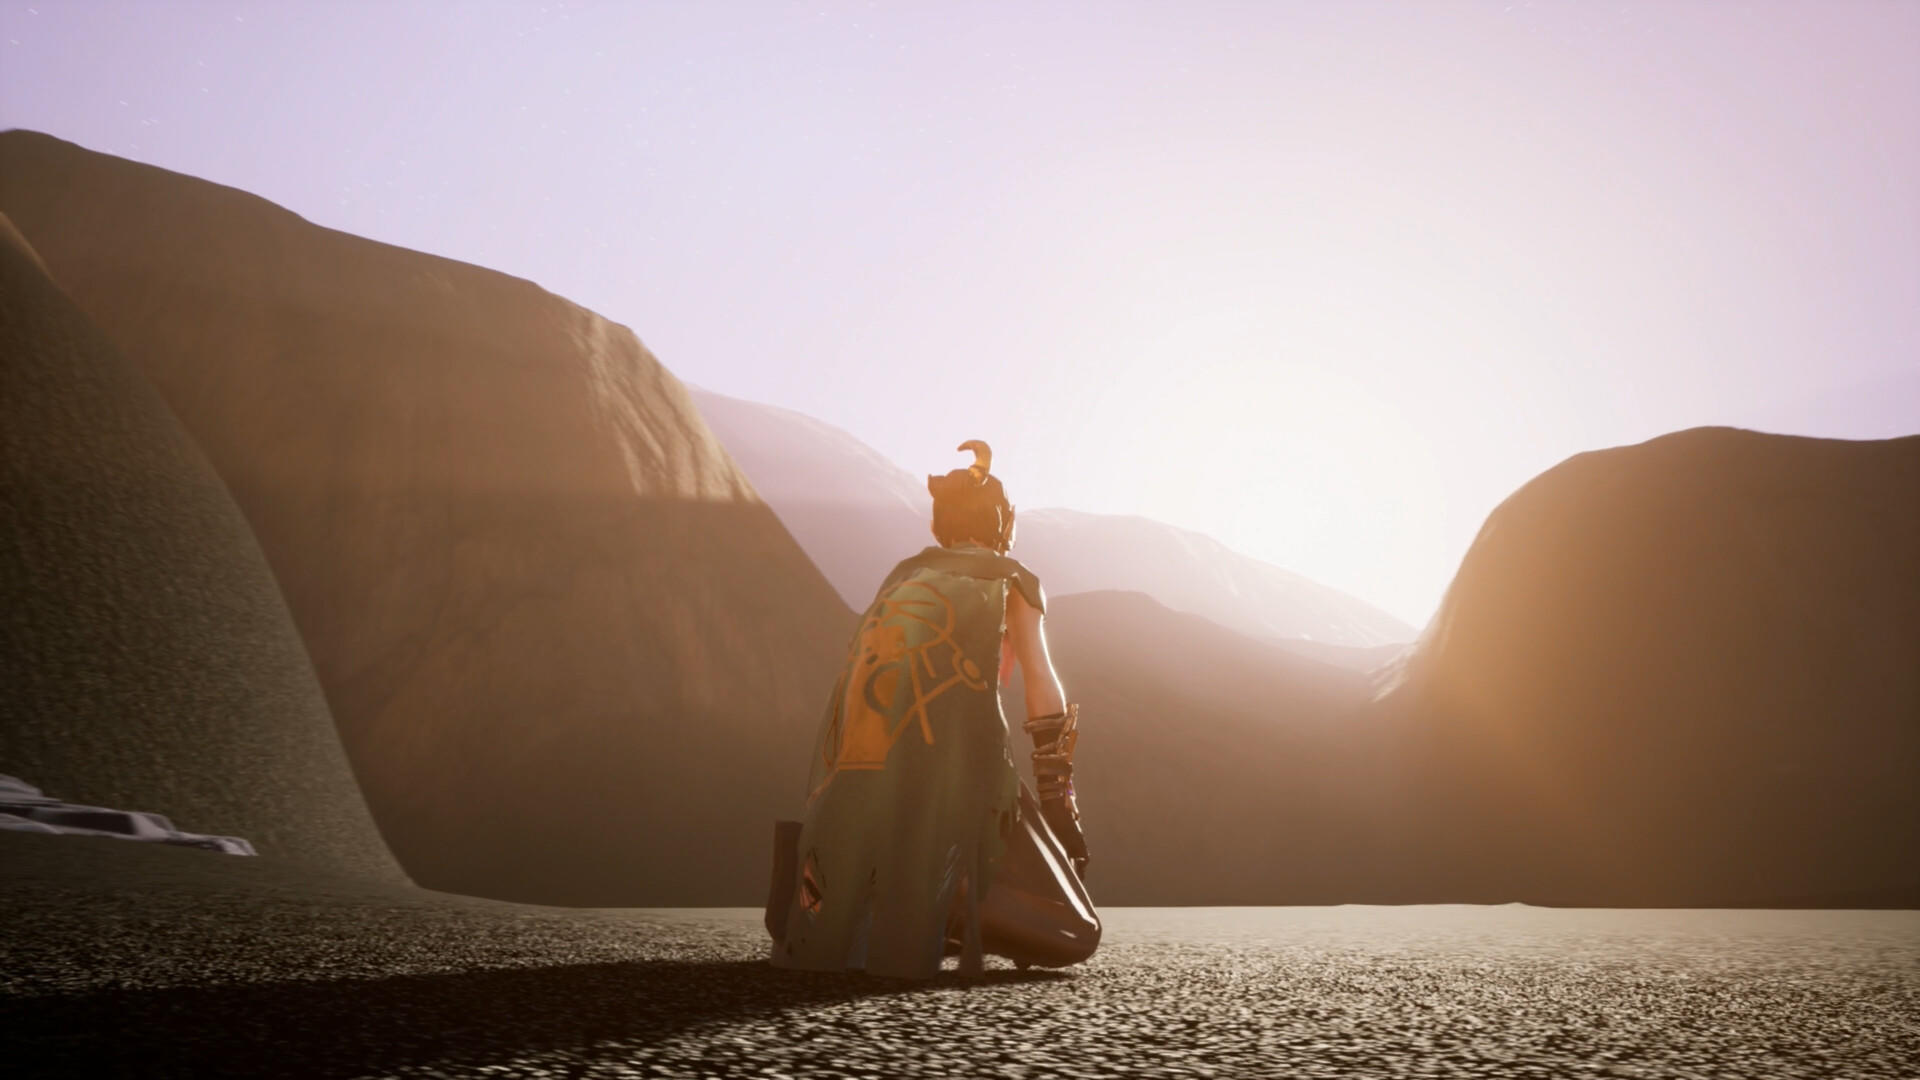 Light of Alariya screenshot game